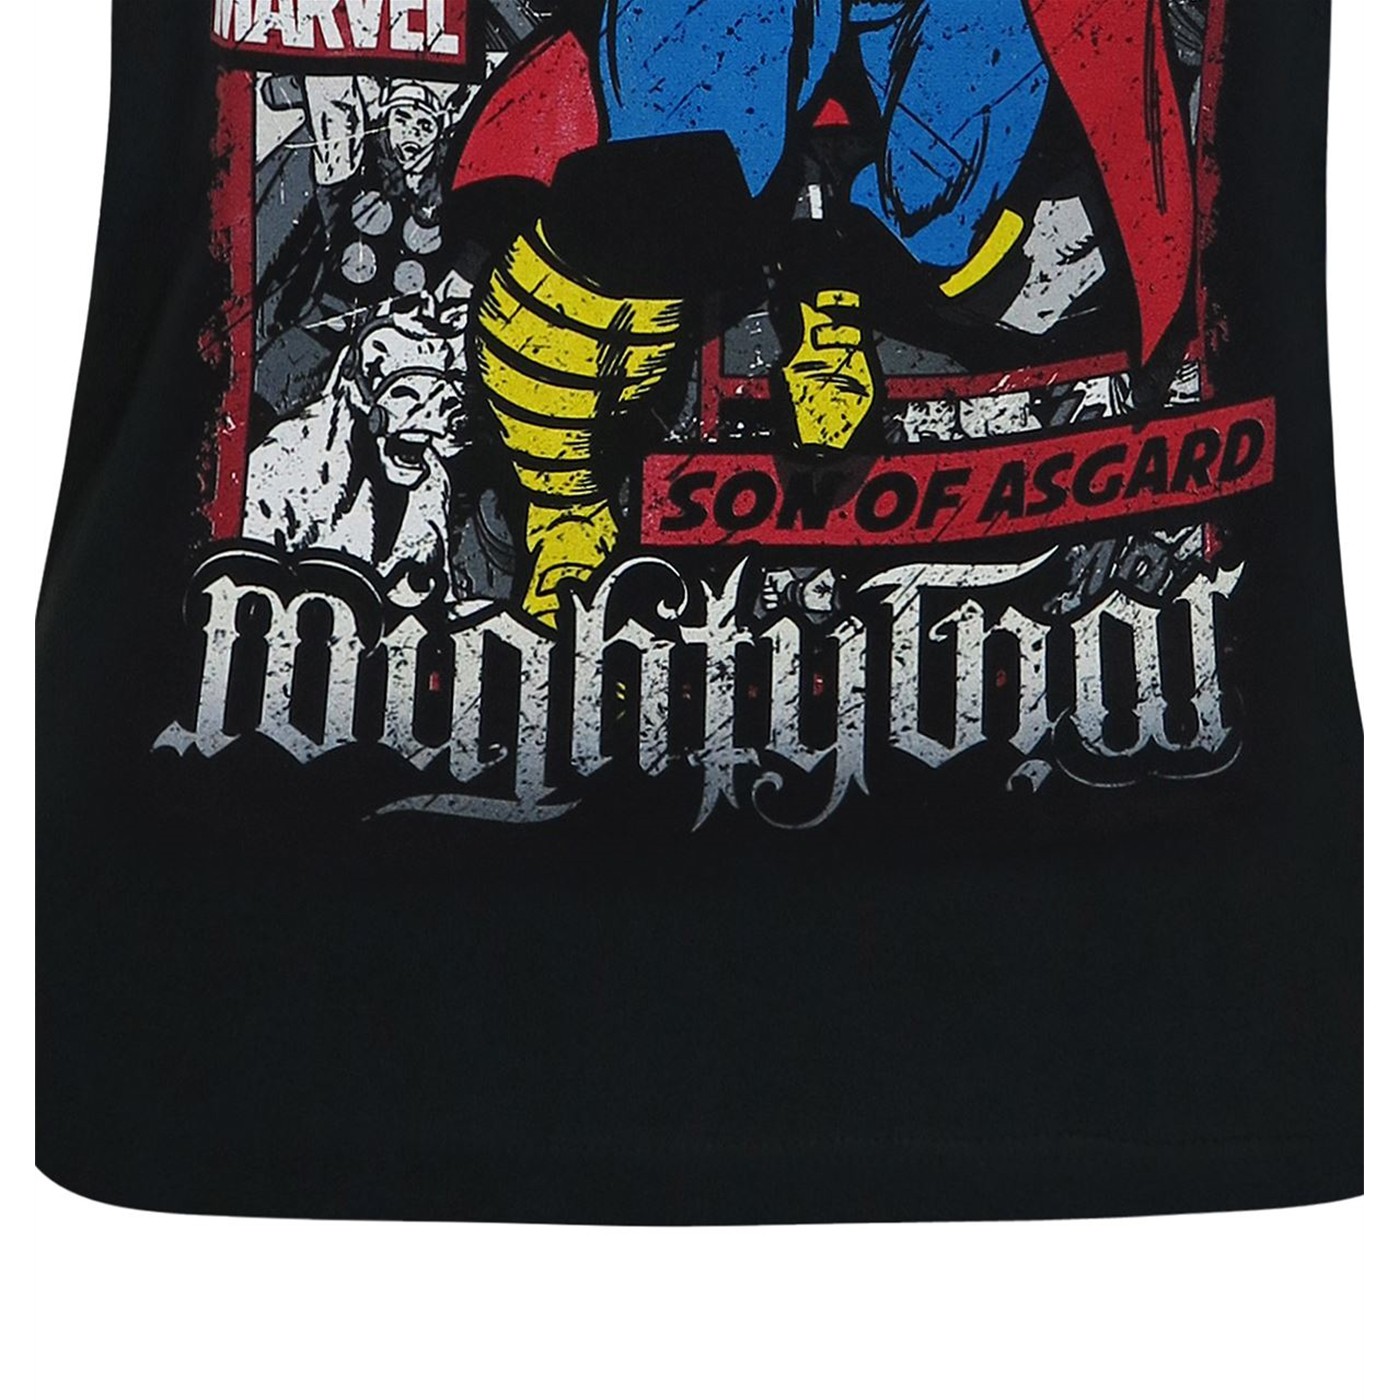 Thor Son of Asgard Ambigram Men's T-Shirt